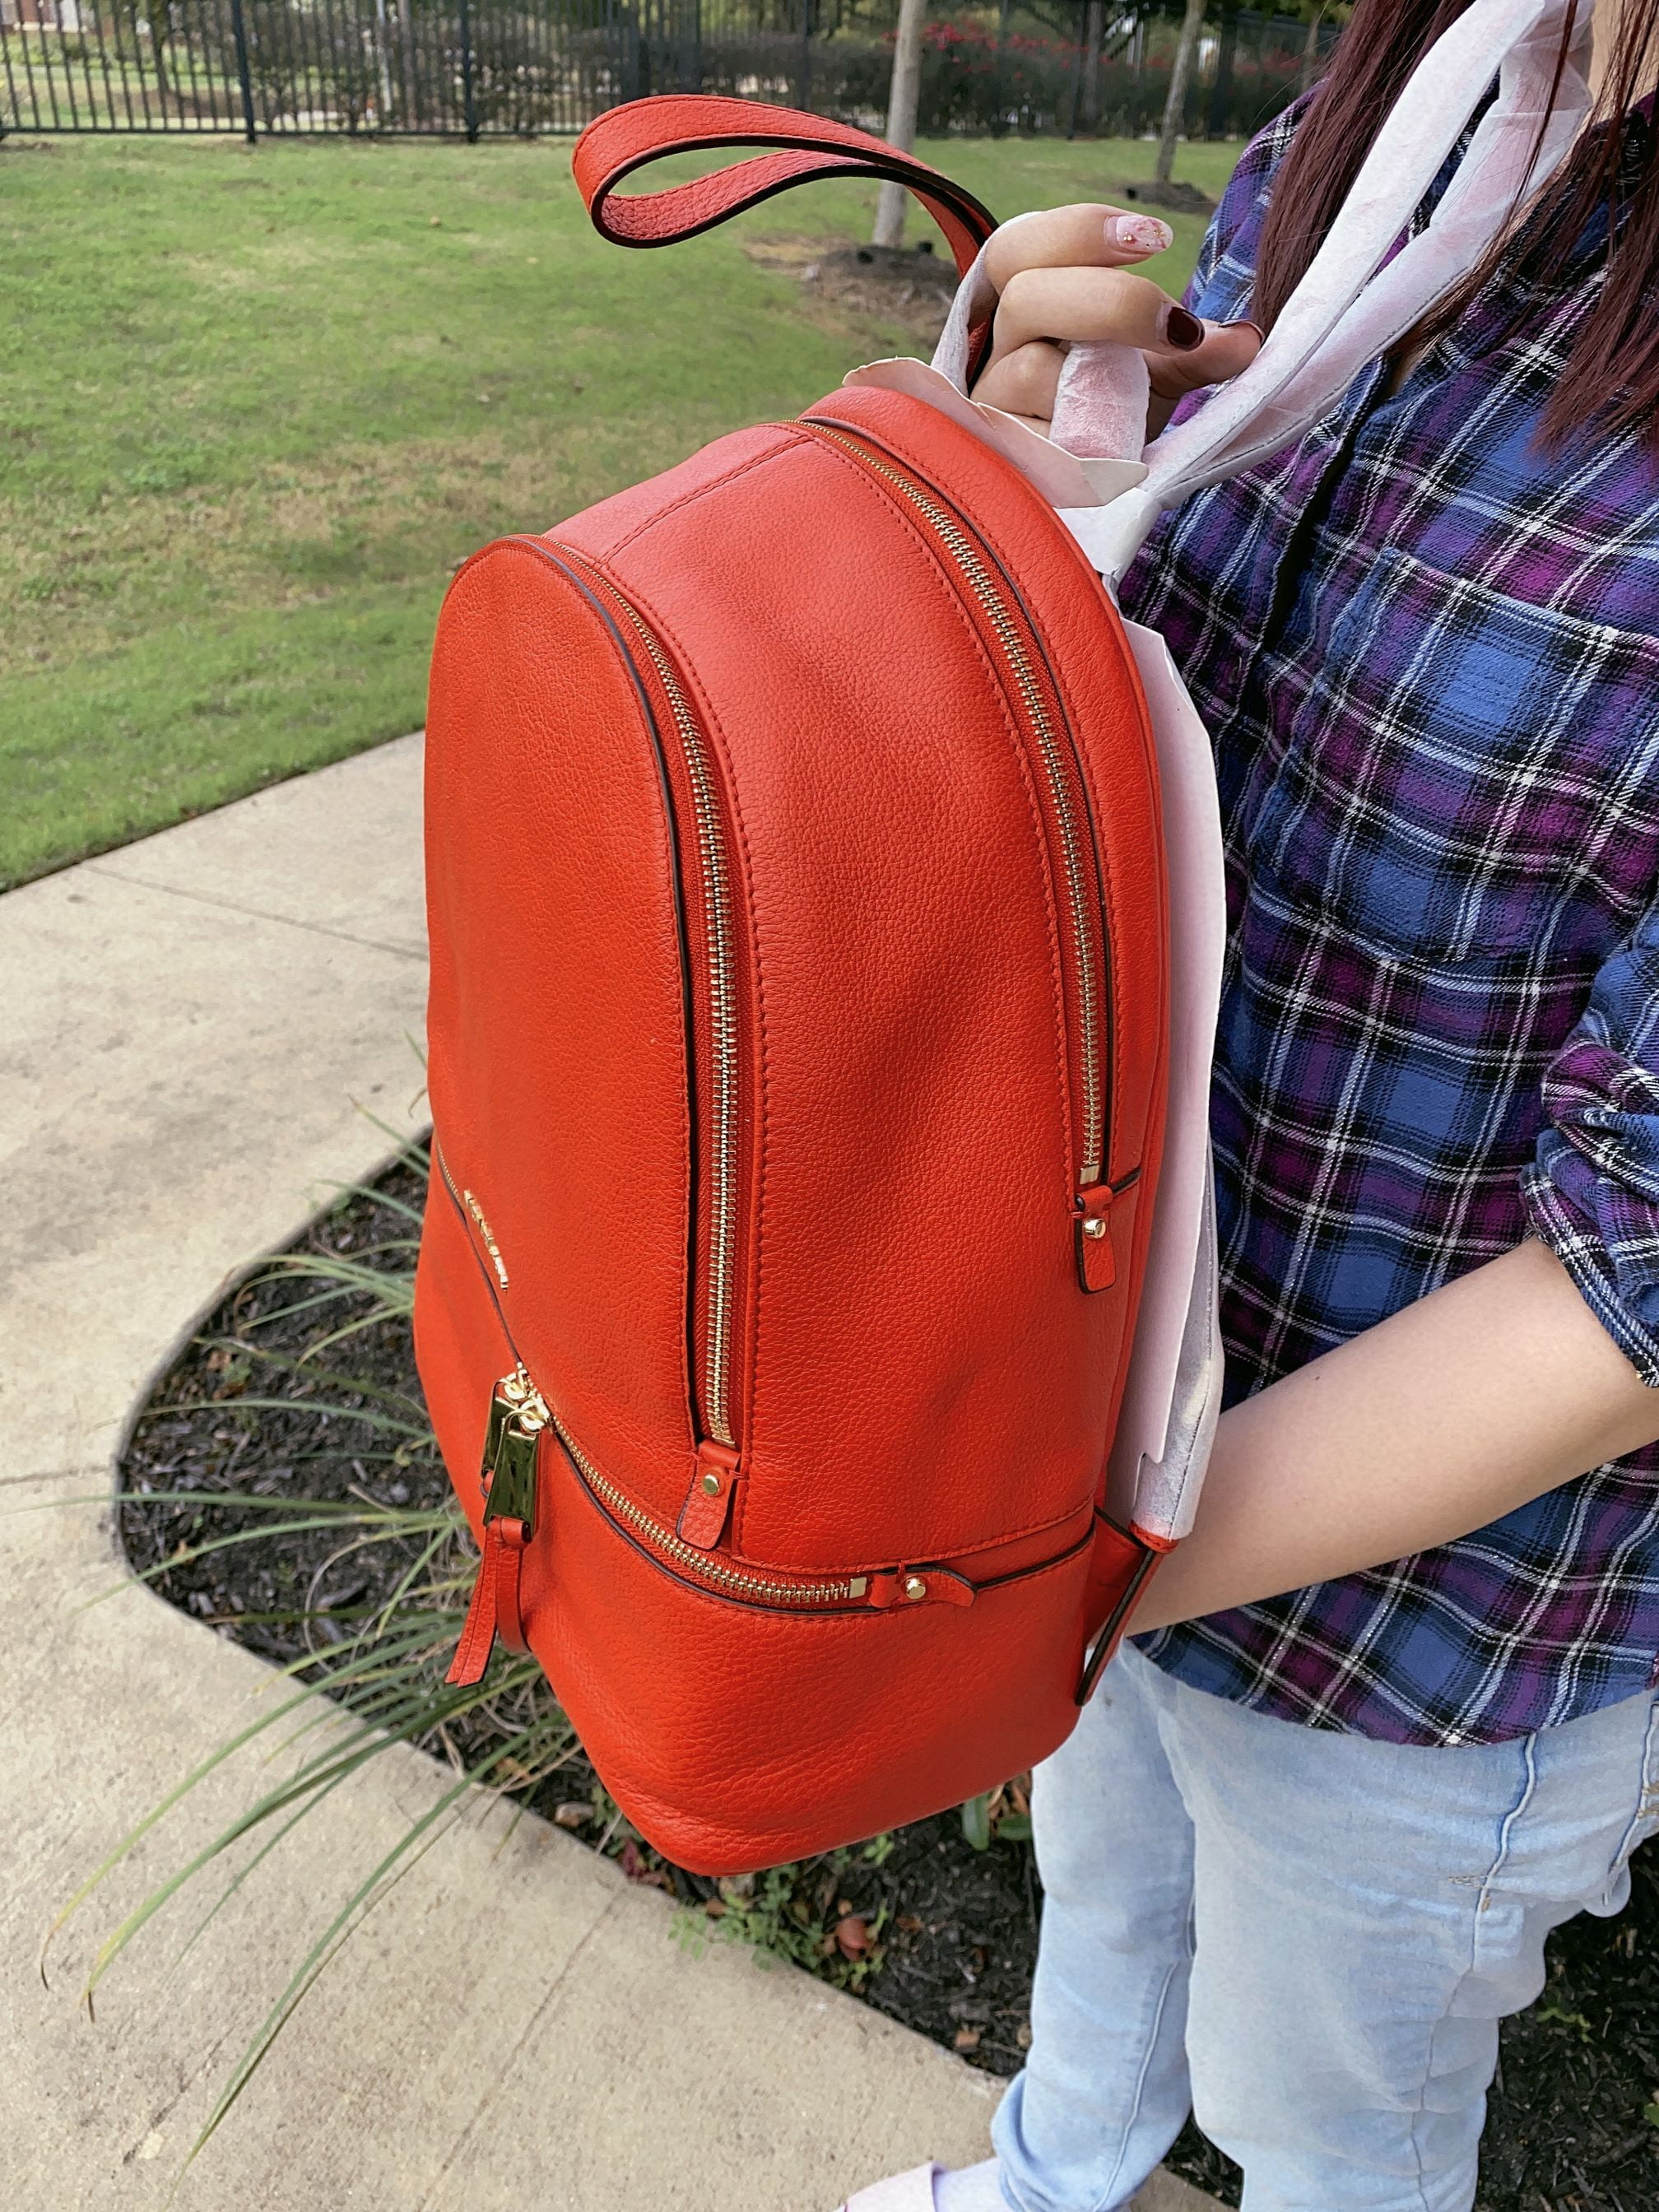 rhea large leather backpack